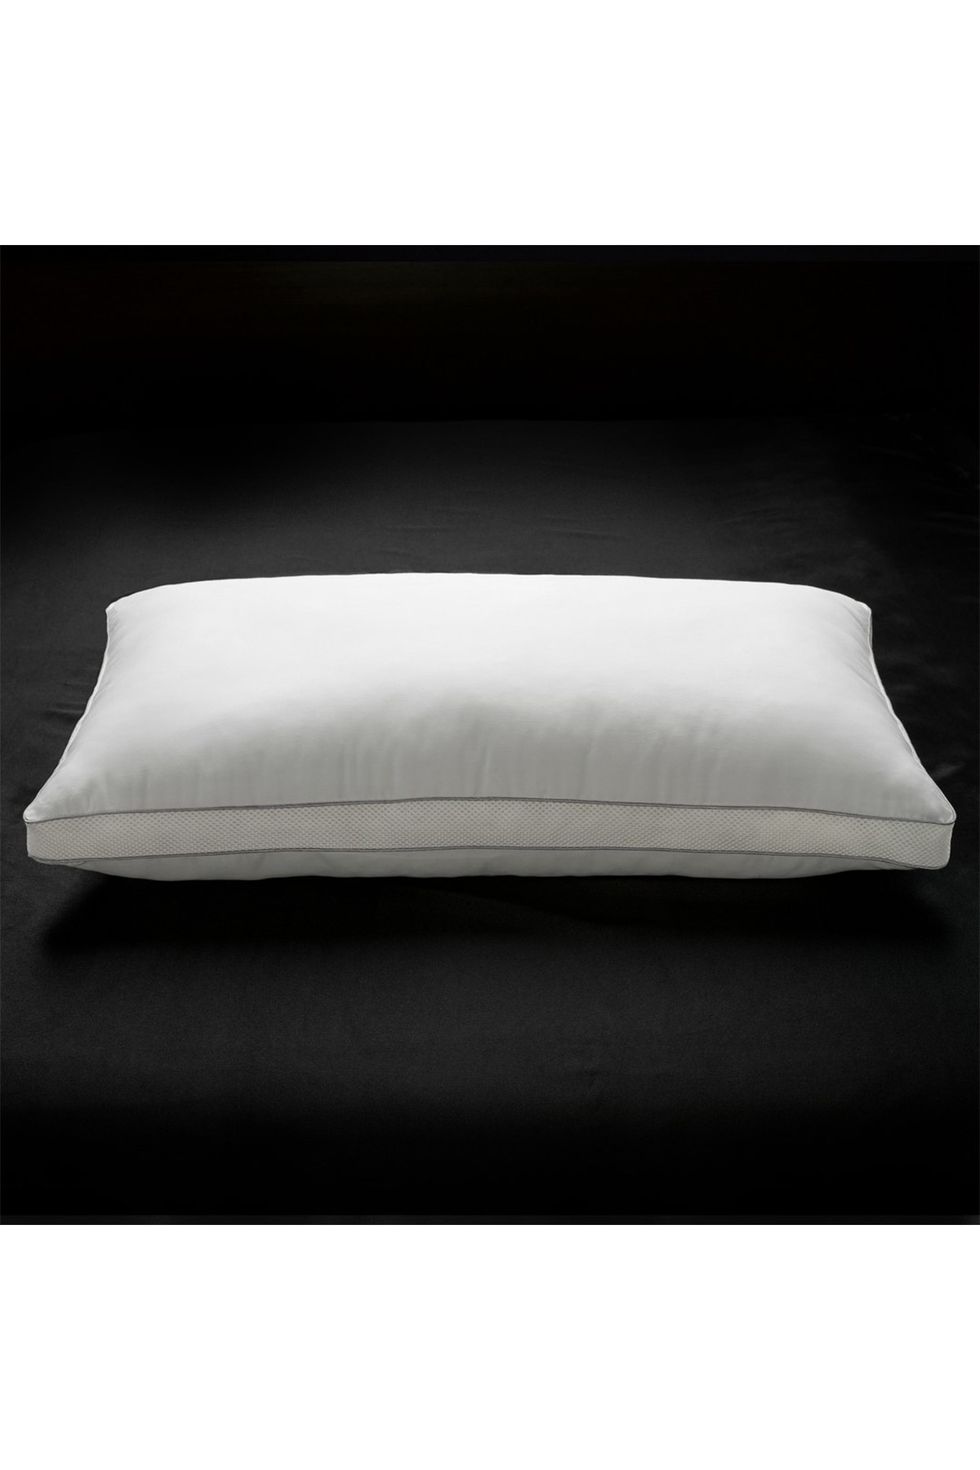 Ella Jayne Medium Memory Fiber Pillow, Standard, White